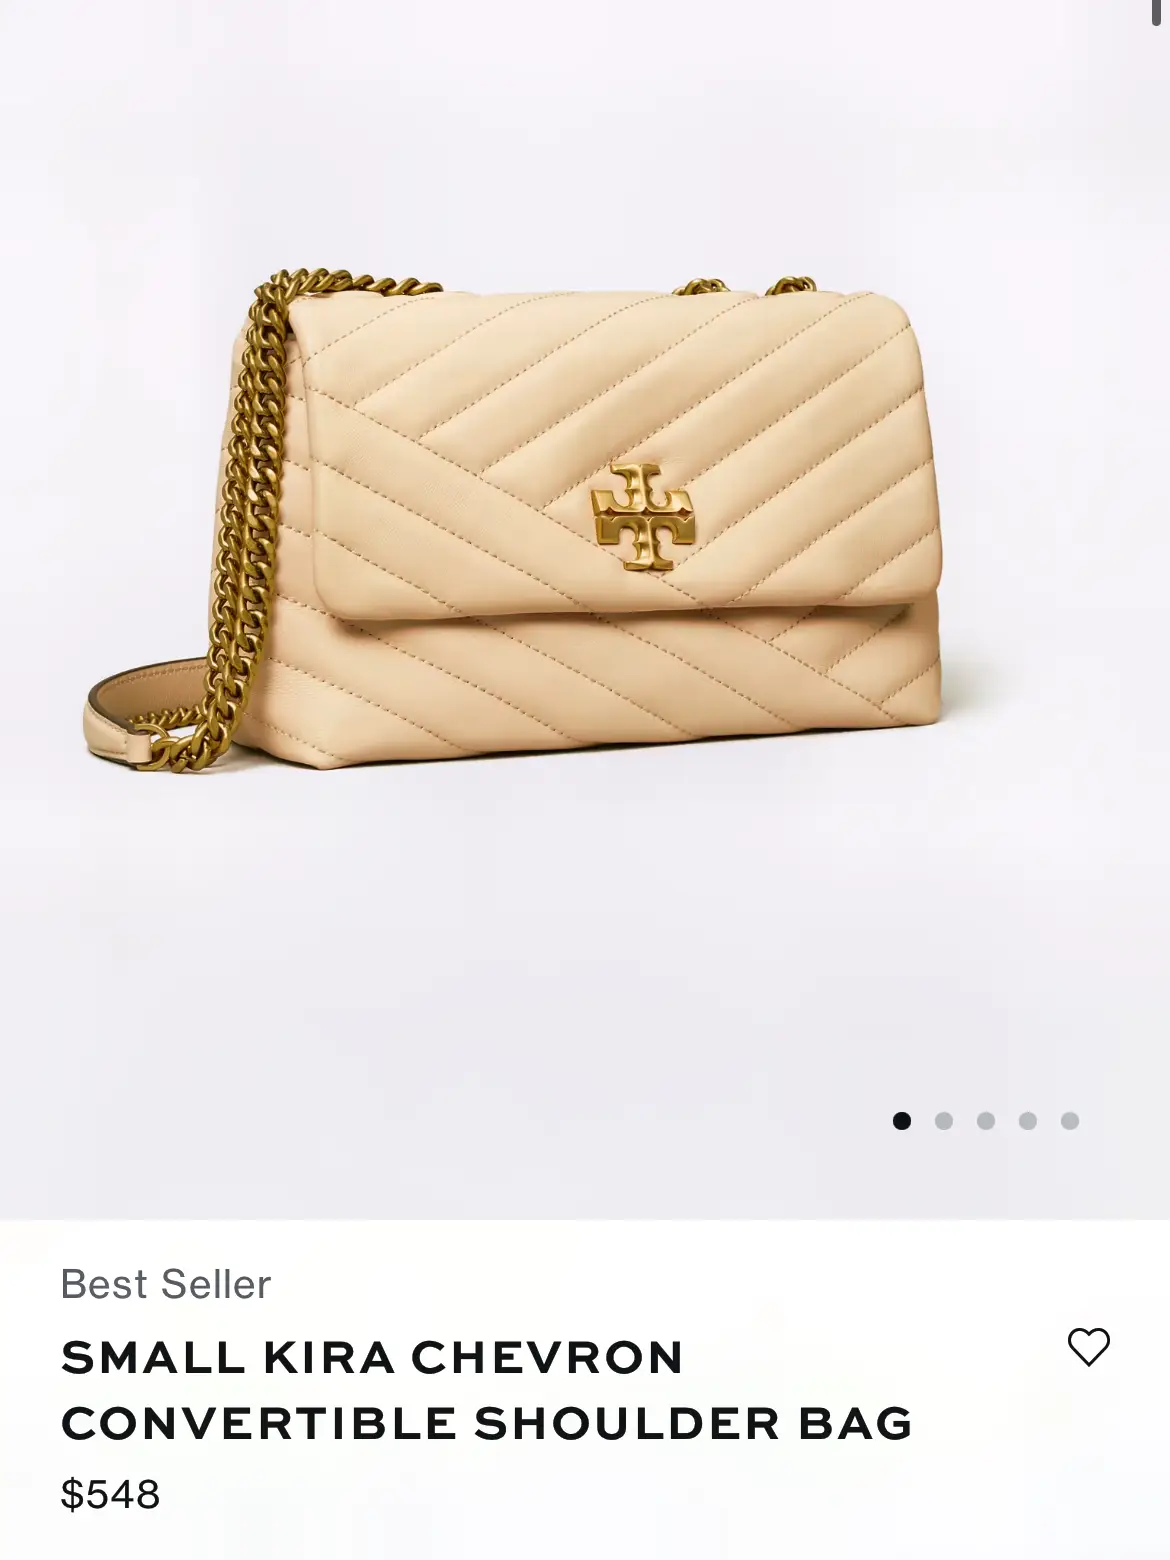 NEW Tory Burch New Cream SMALL Kira Chevron Convertible Shoulder Bag $548